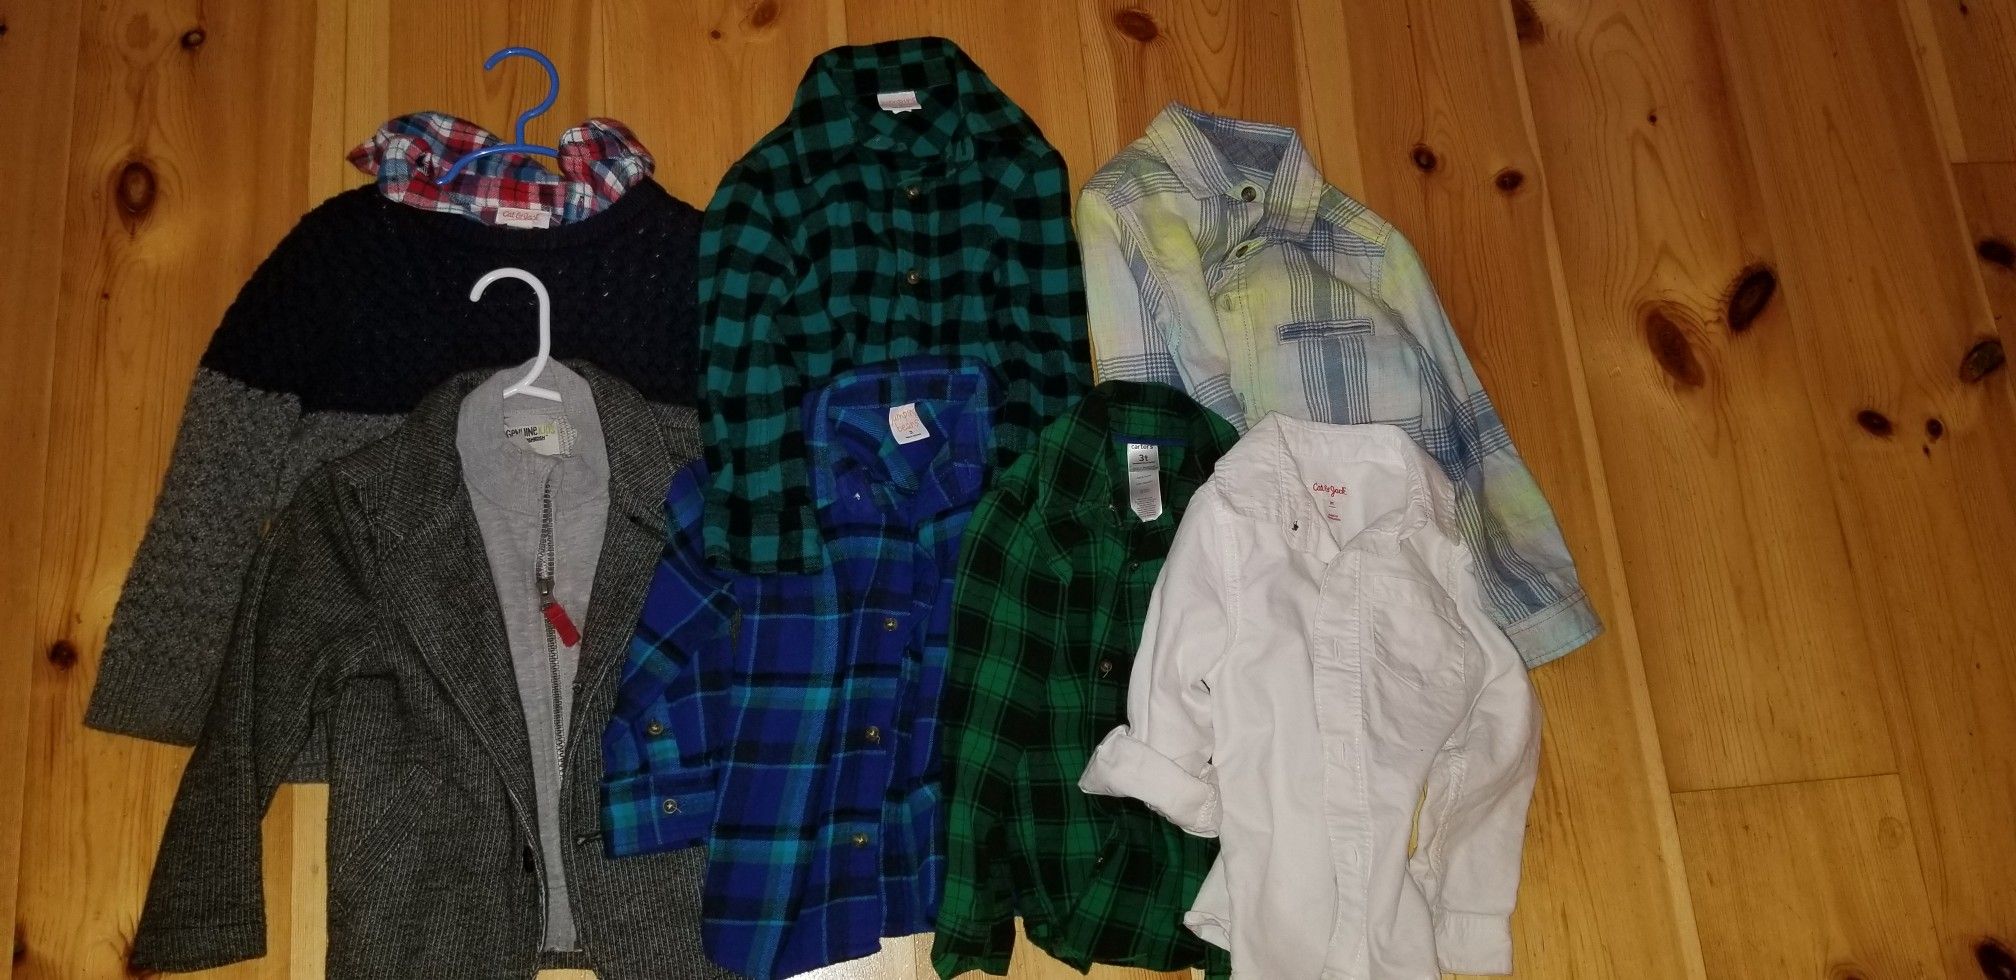 Dress shirts and jackets bundle